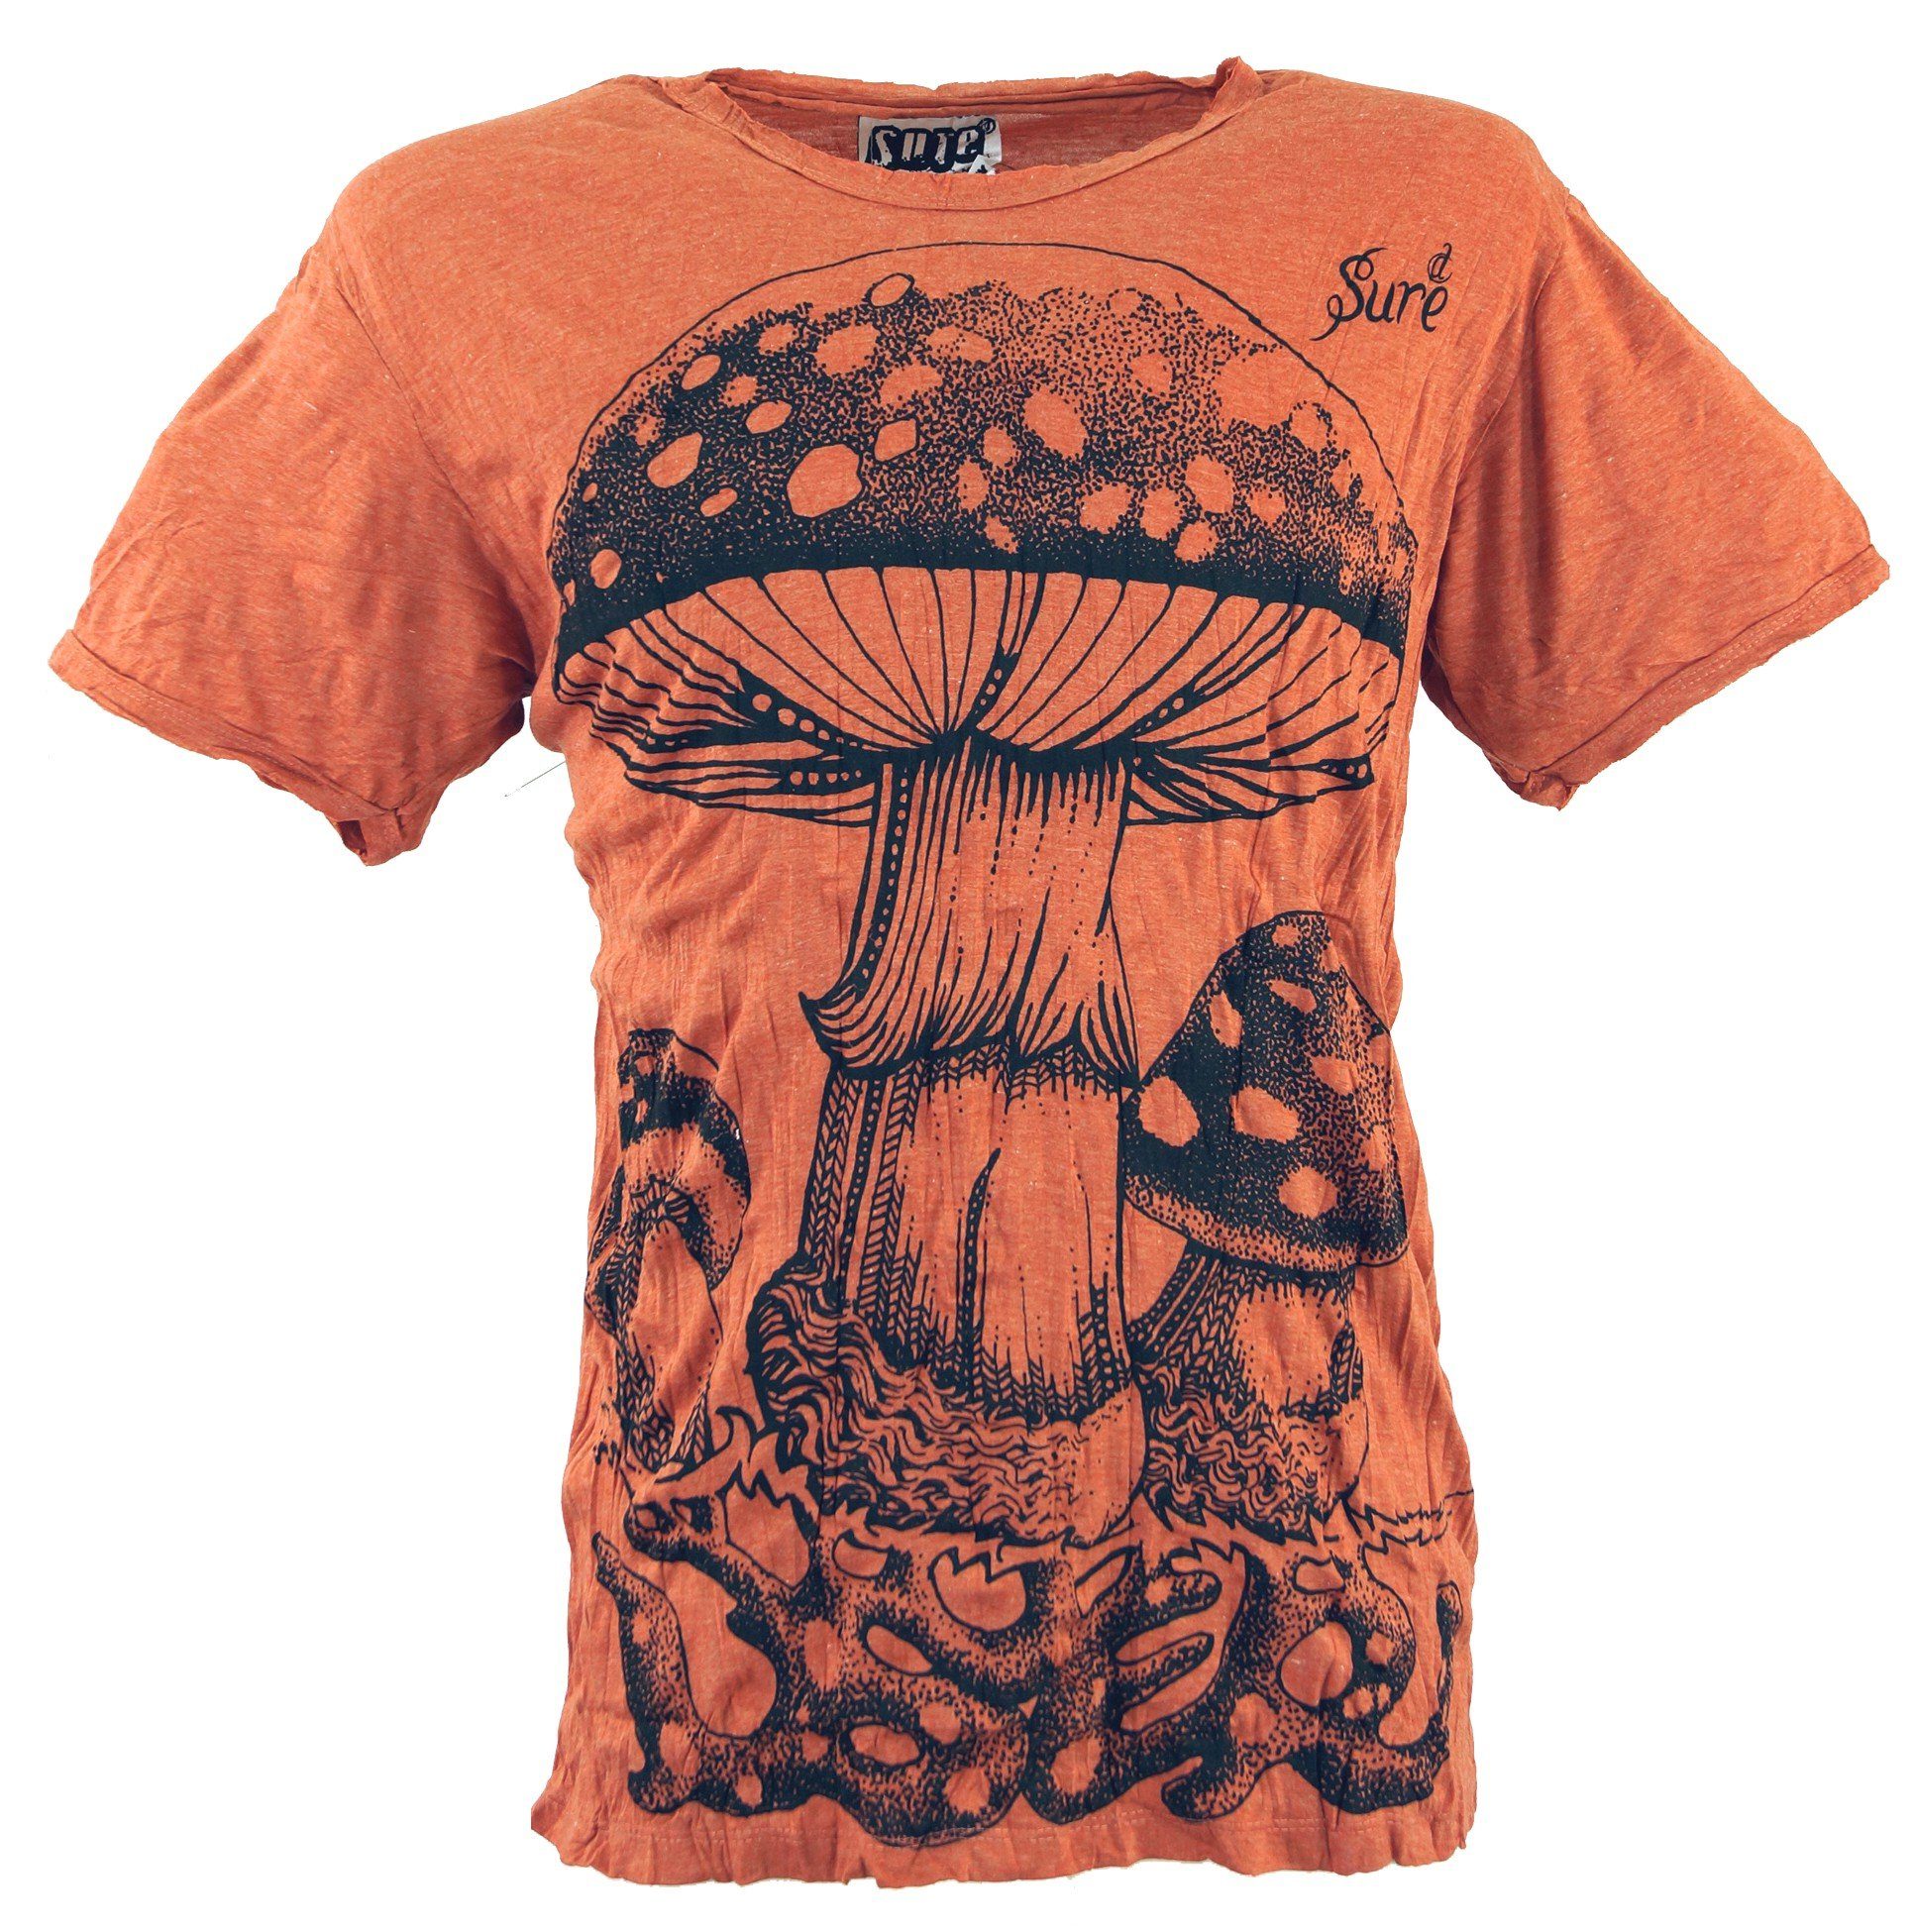 Guru-Shop T-Shirt Sure T-Shirt - Style, alternative rostorange Goa Fliegenpilz Festival, Bekleidung